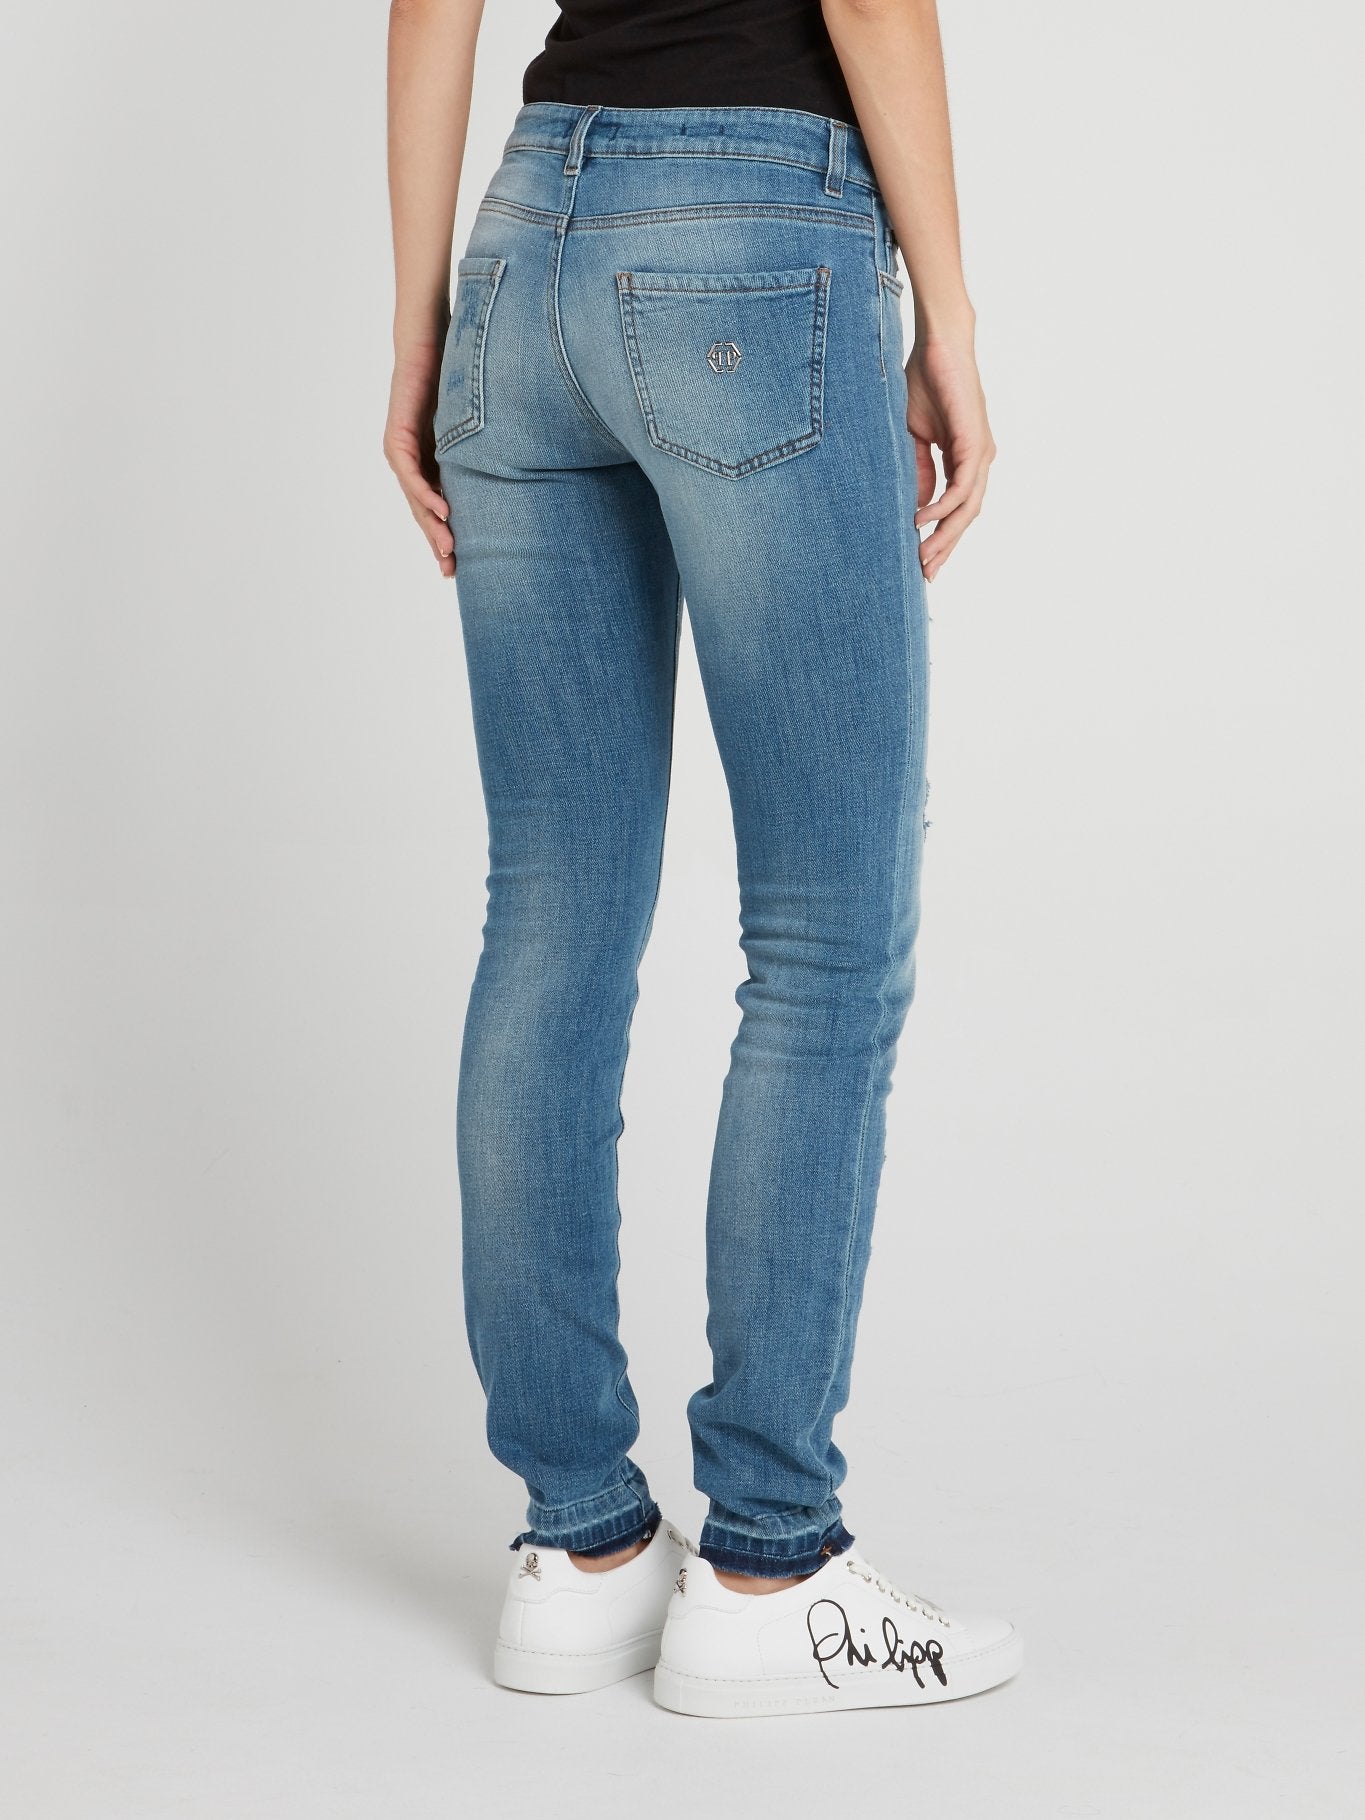 Morgan Blue Distressed Skinny Jeans